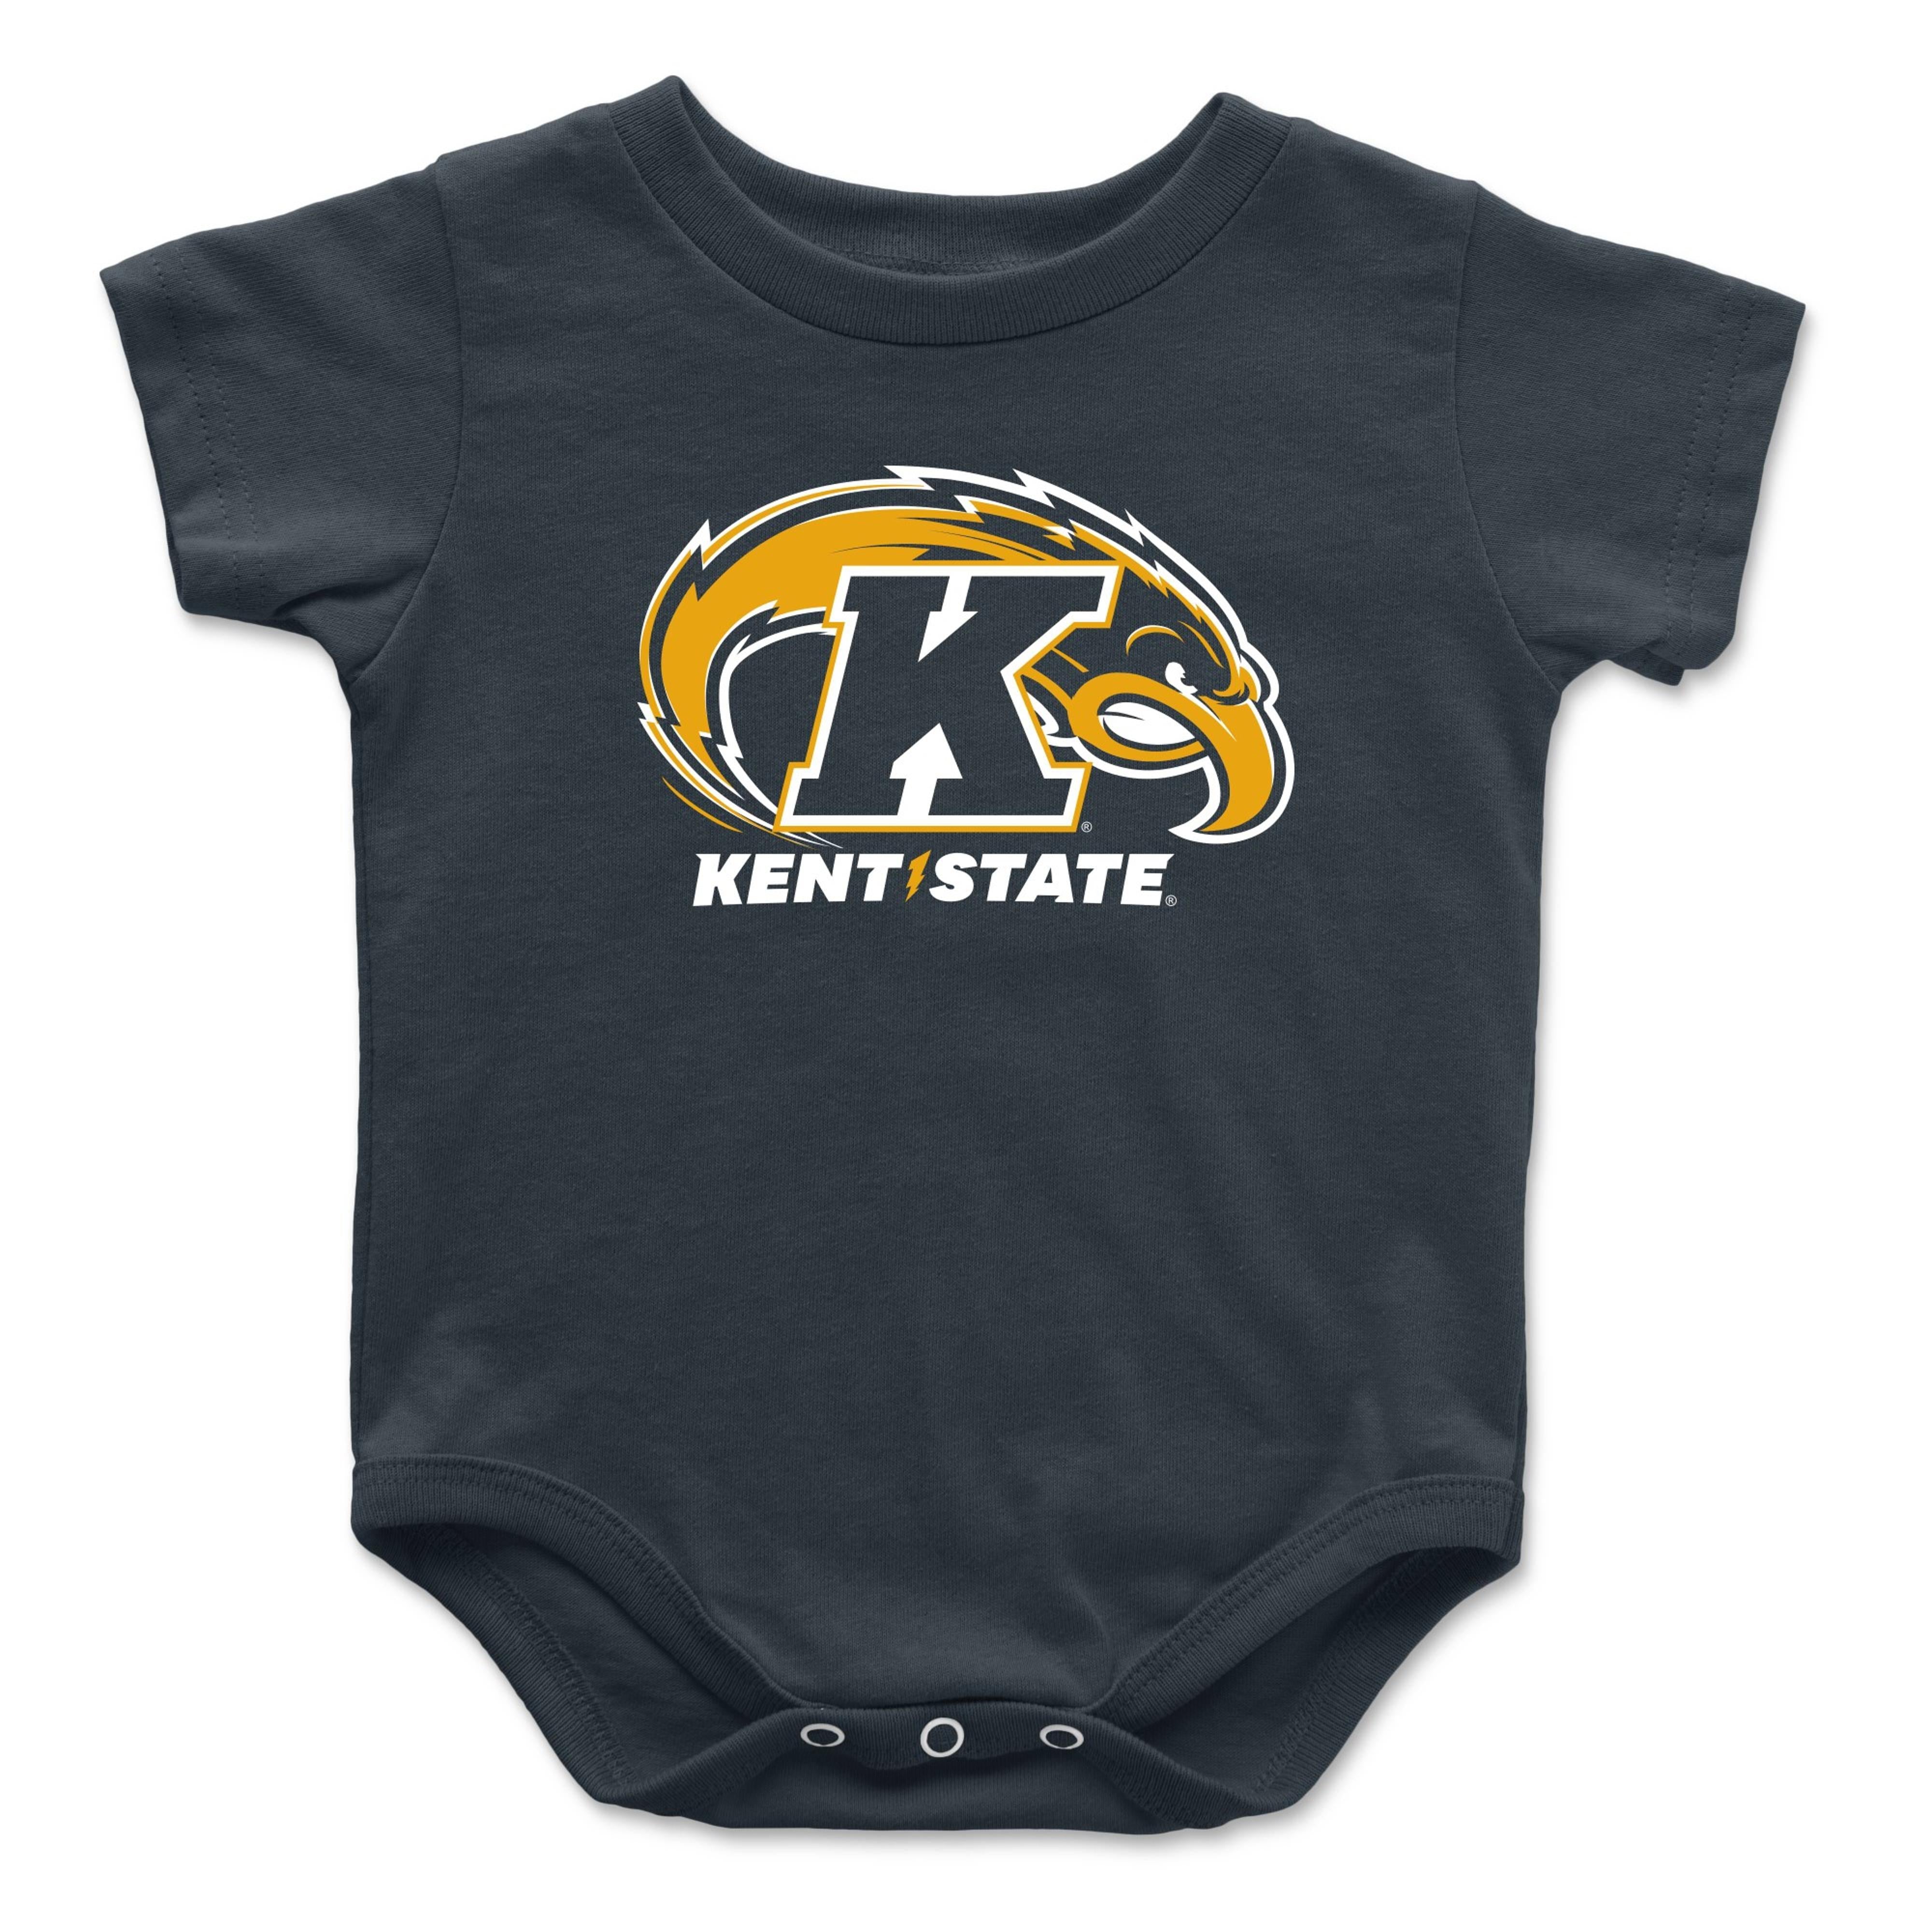 Kent State Navy Infant Bodysuit